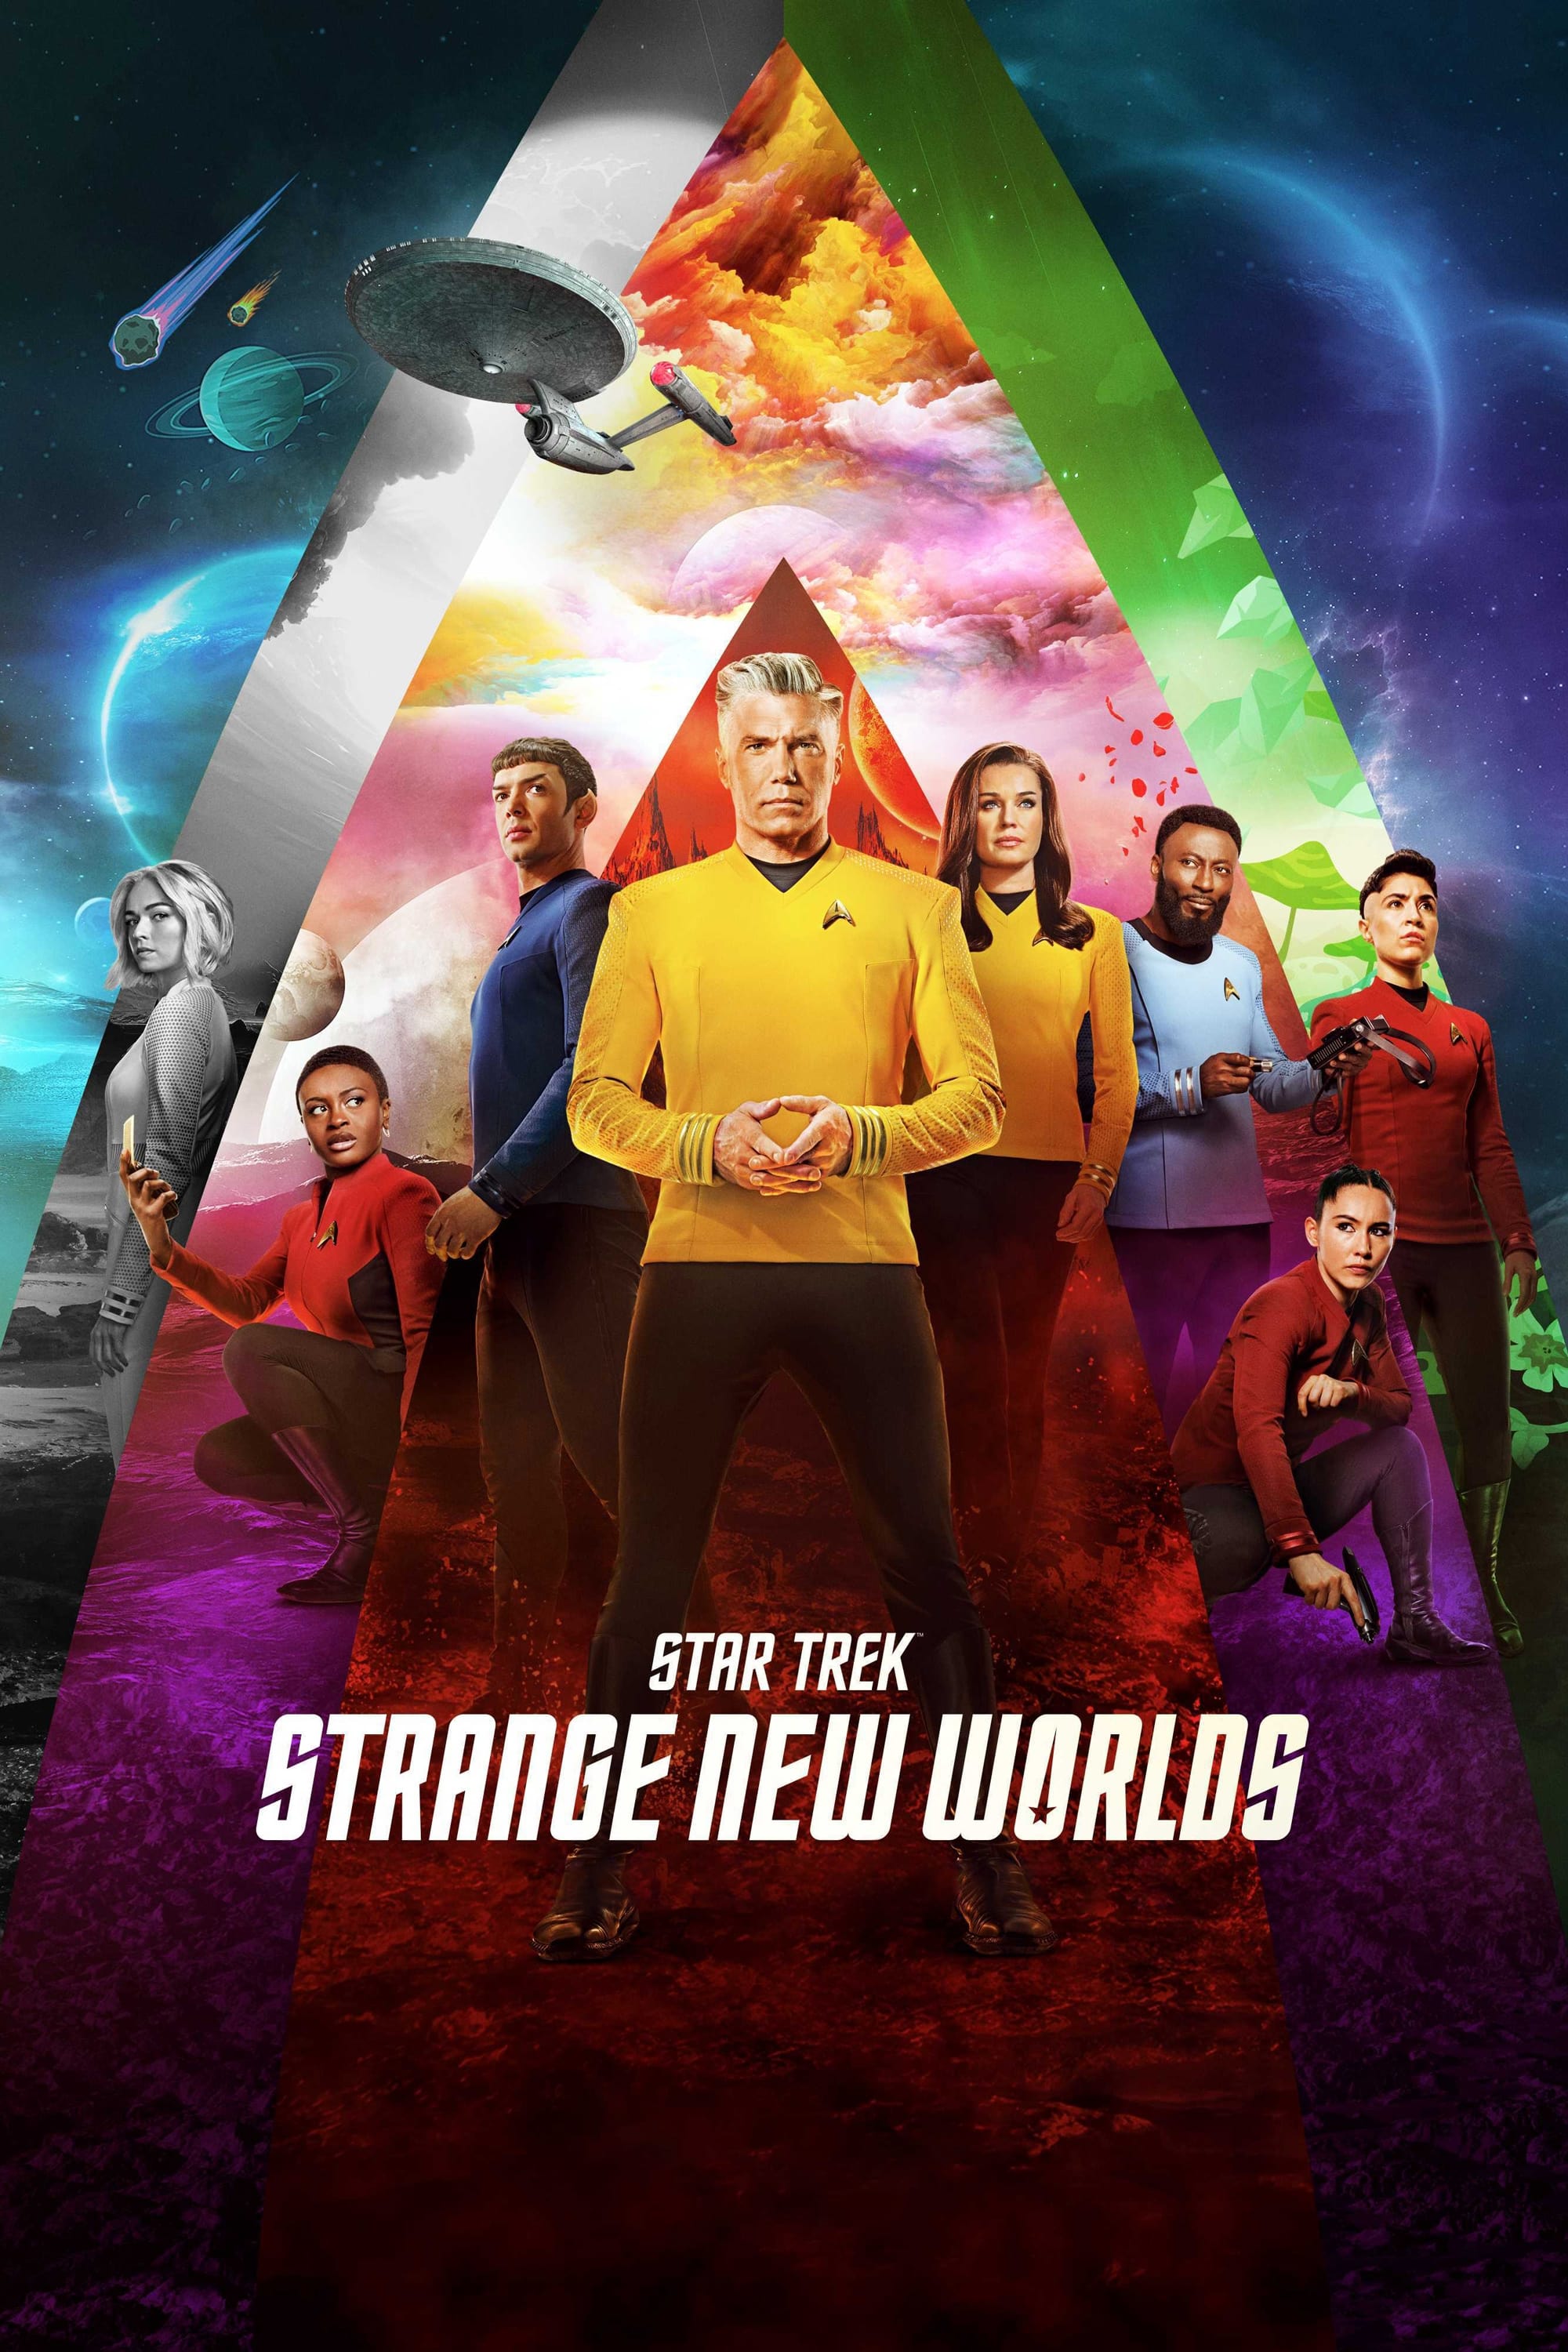 Star Trek: Strange New Worlds TV Shows About Space